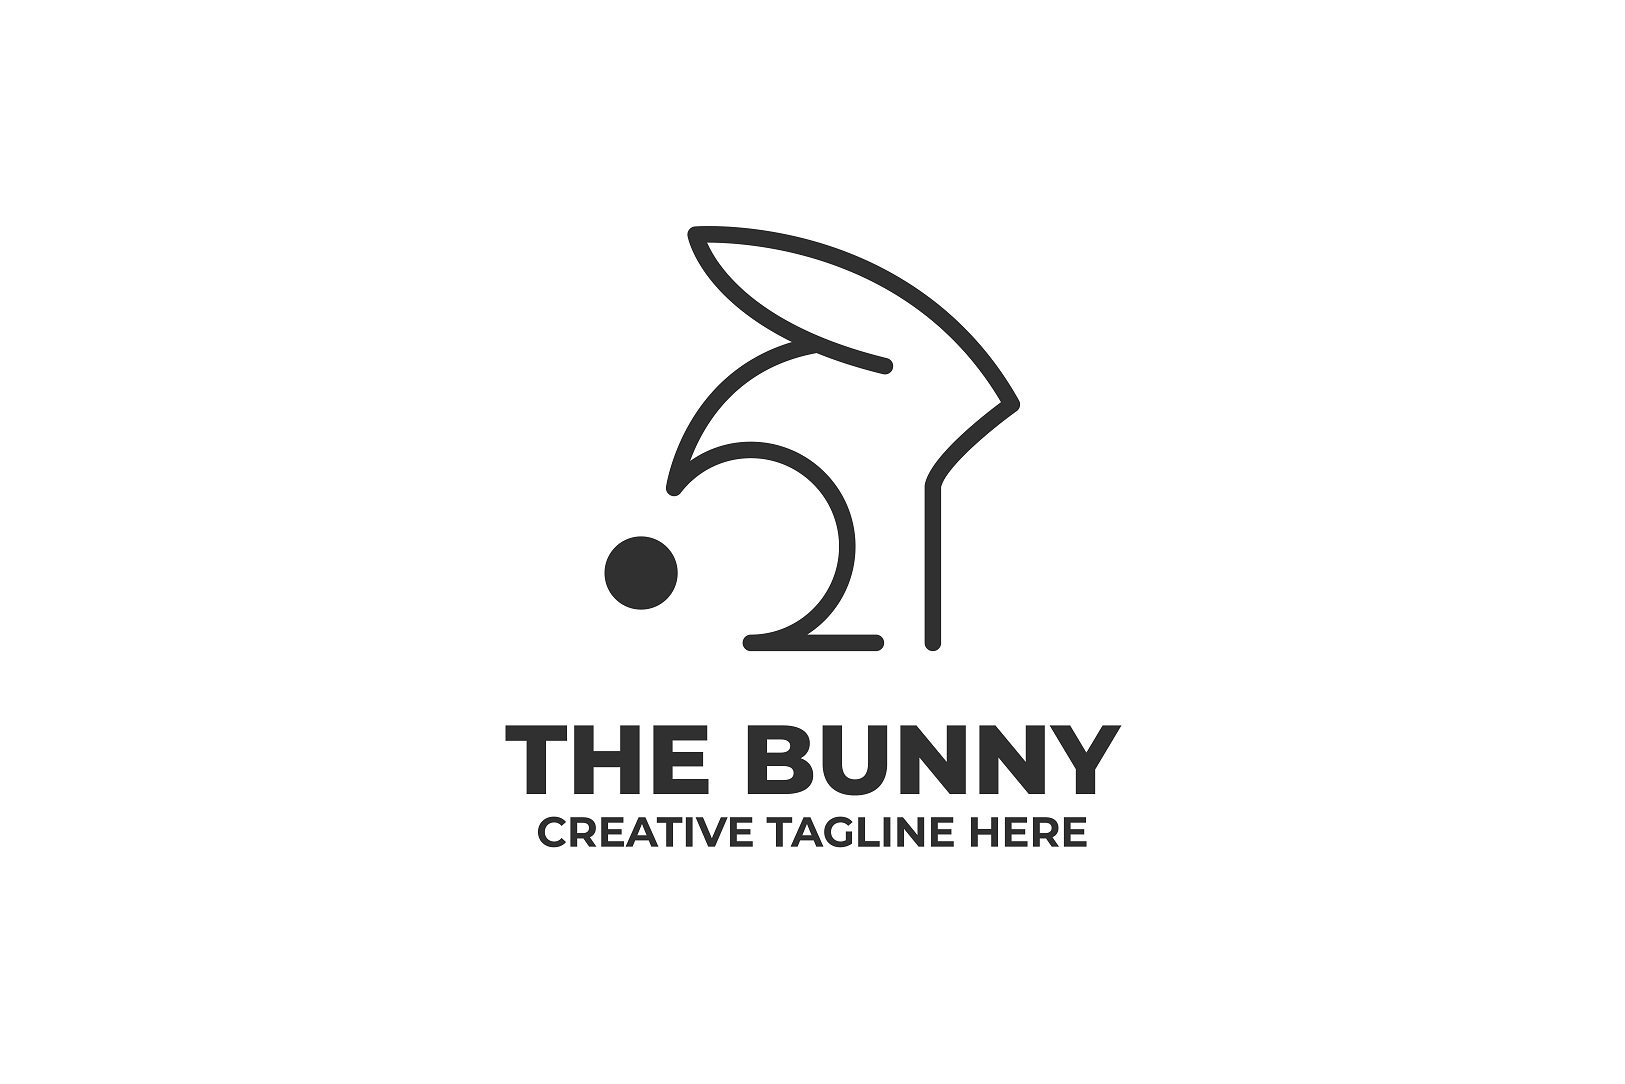 Bunny Monoline Logo Template cover image.